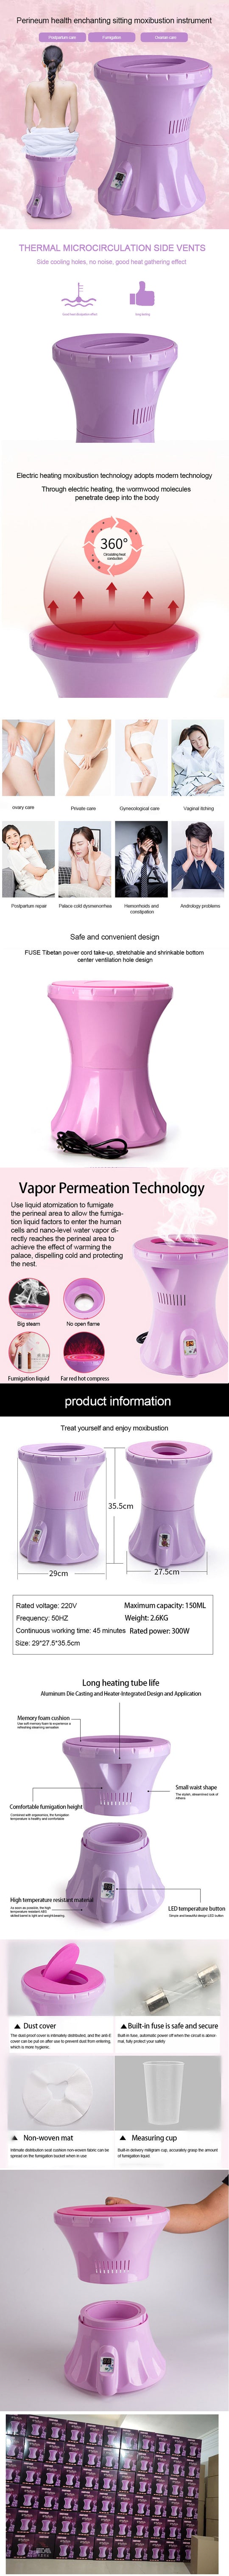 Yoni Electric Steam Seat Vaginal SPA Steamer Herbal Feminine